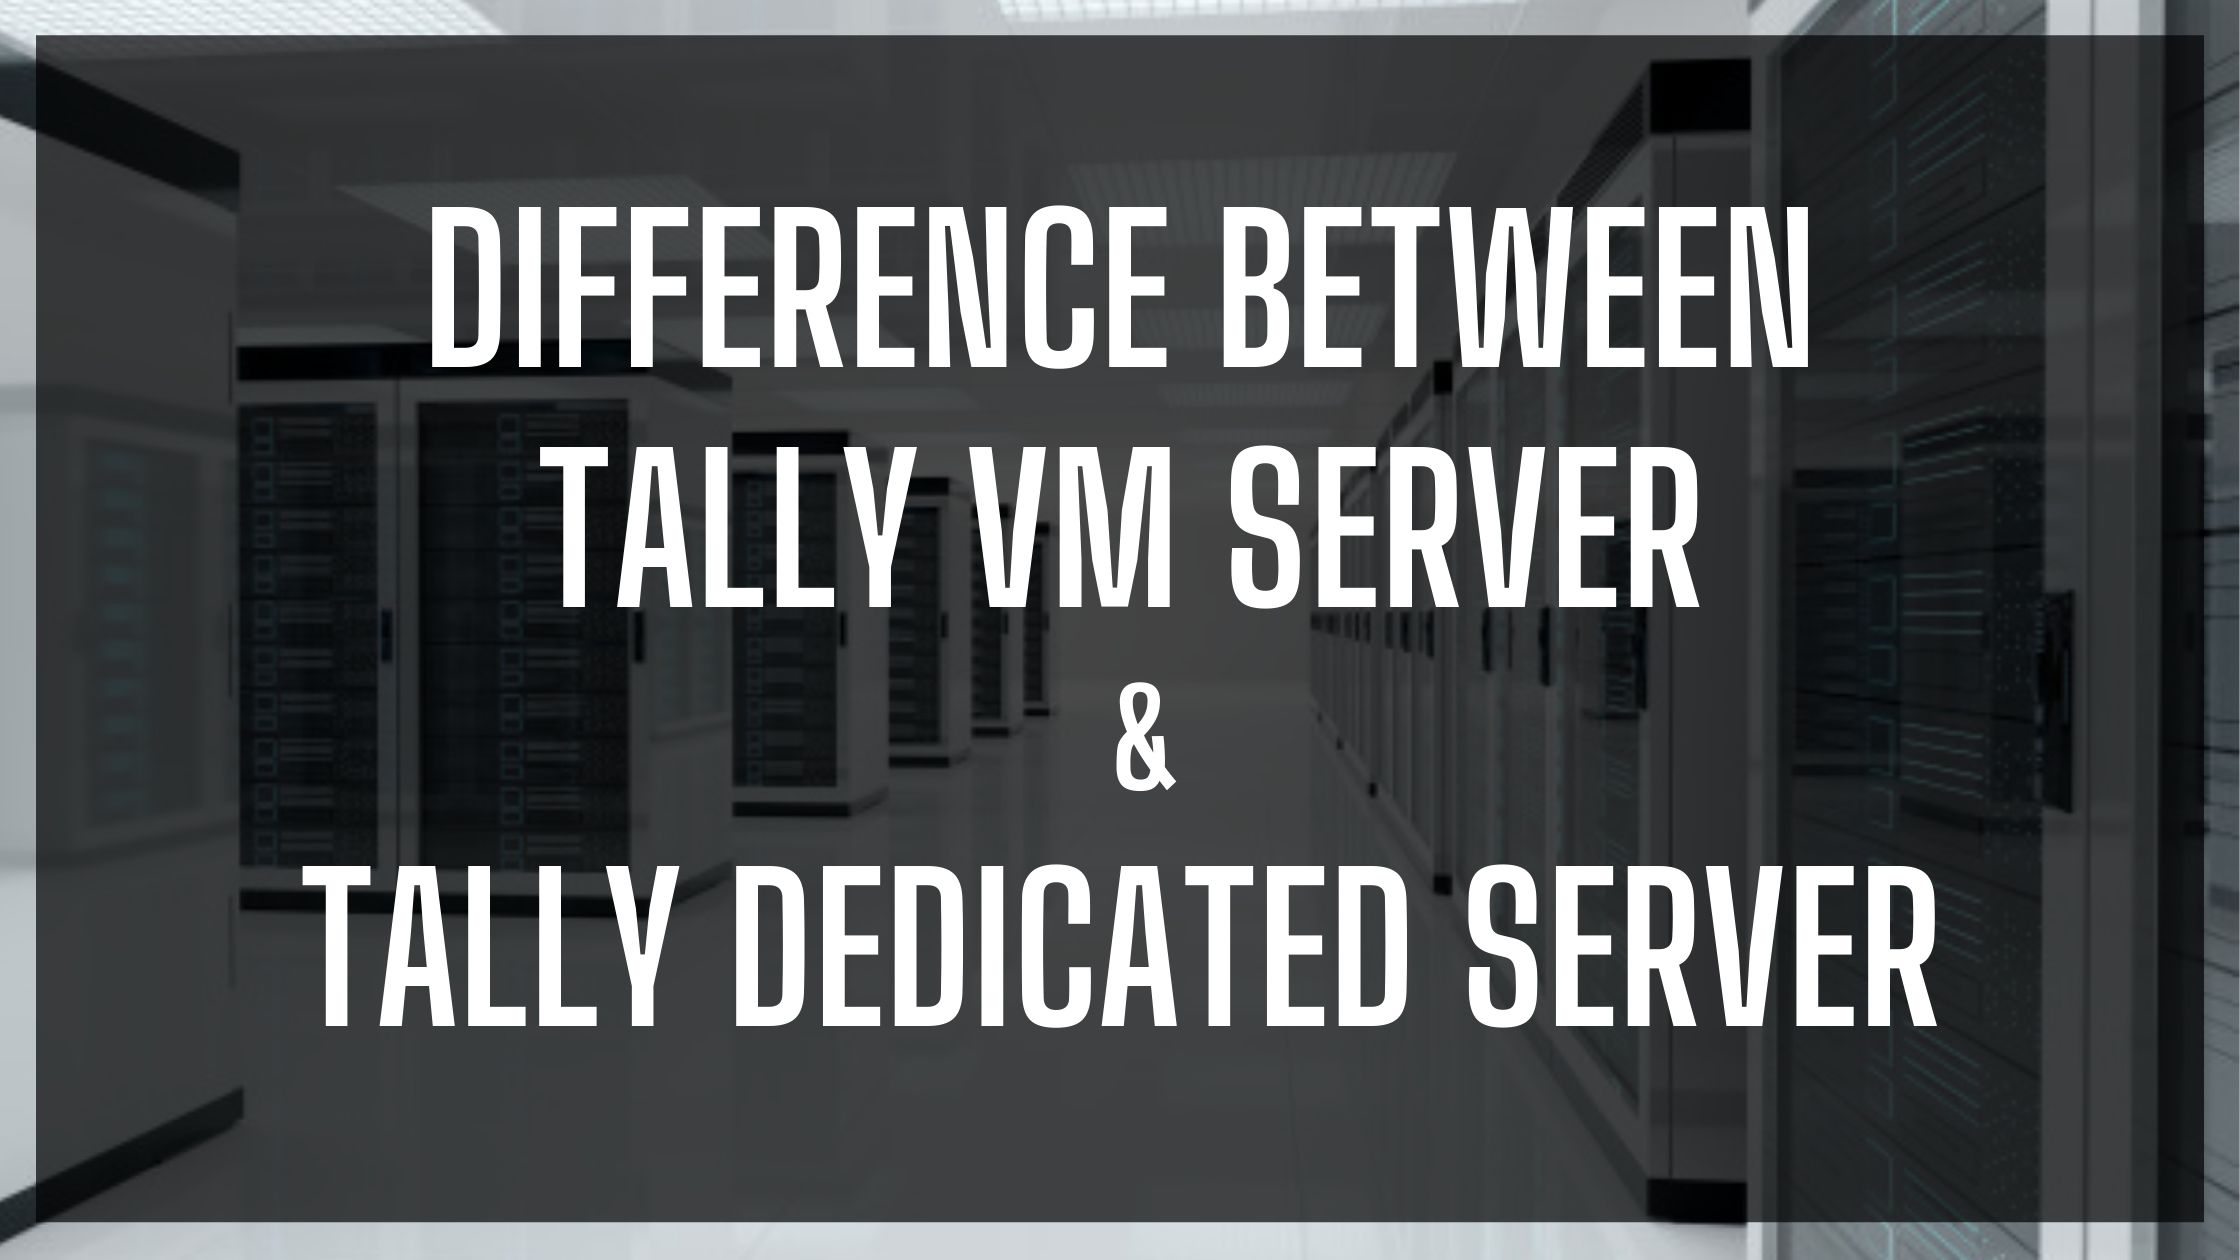 Tally vm vs tally dedicated server